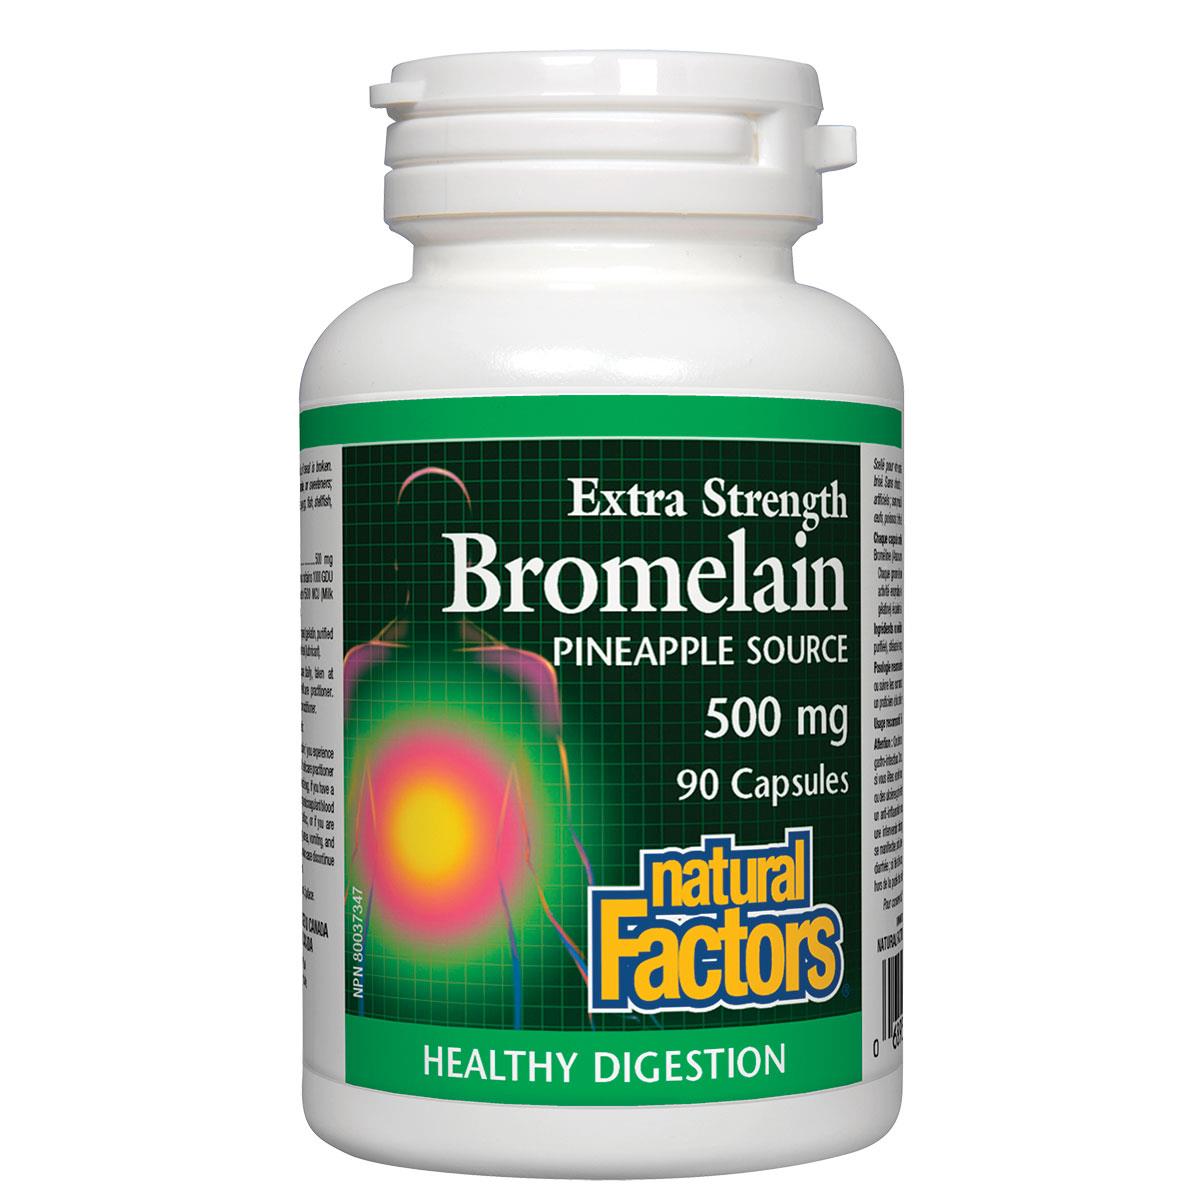 Natural Factors - Bromelain, 500mg (extra strength) - 90 Caps - Homegrown Foods, Stony Plain